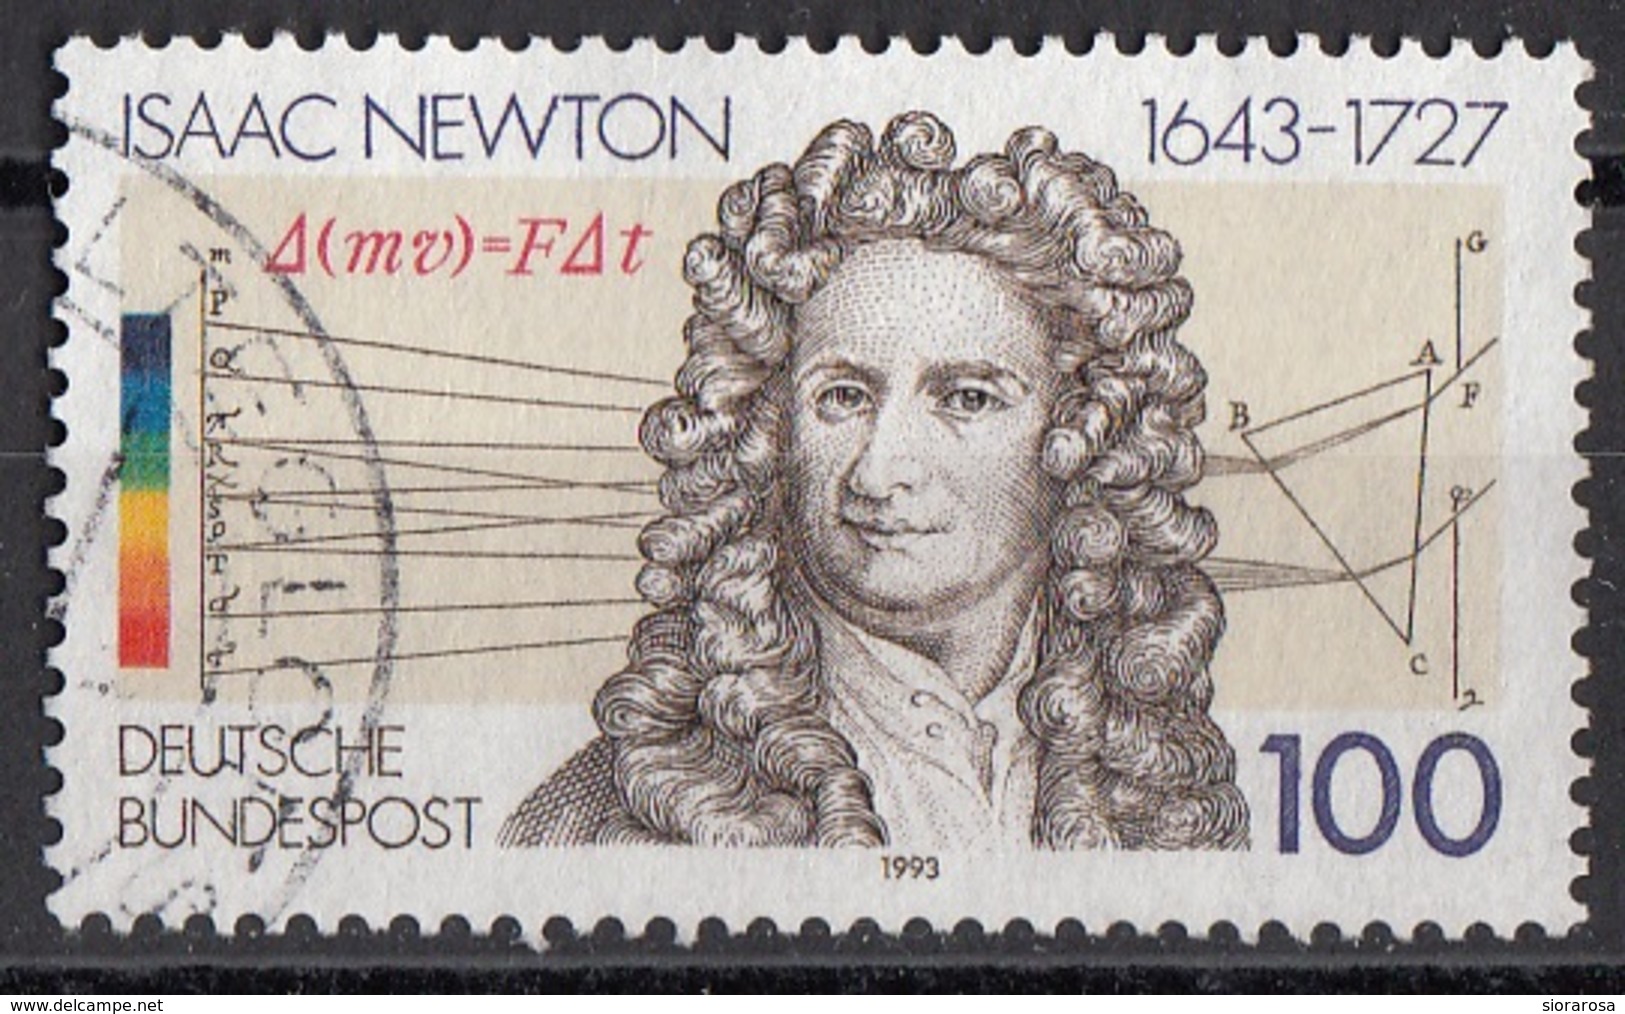 1771 Germania 1993 Isaac Newton Matematico Astronomo Fisico Teologo Germany Bundespost - Teologi